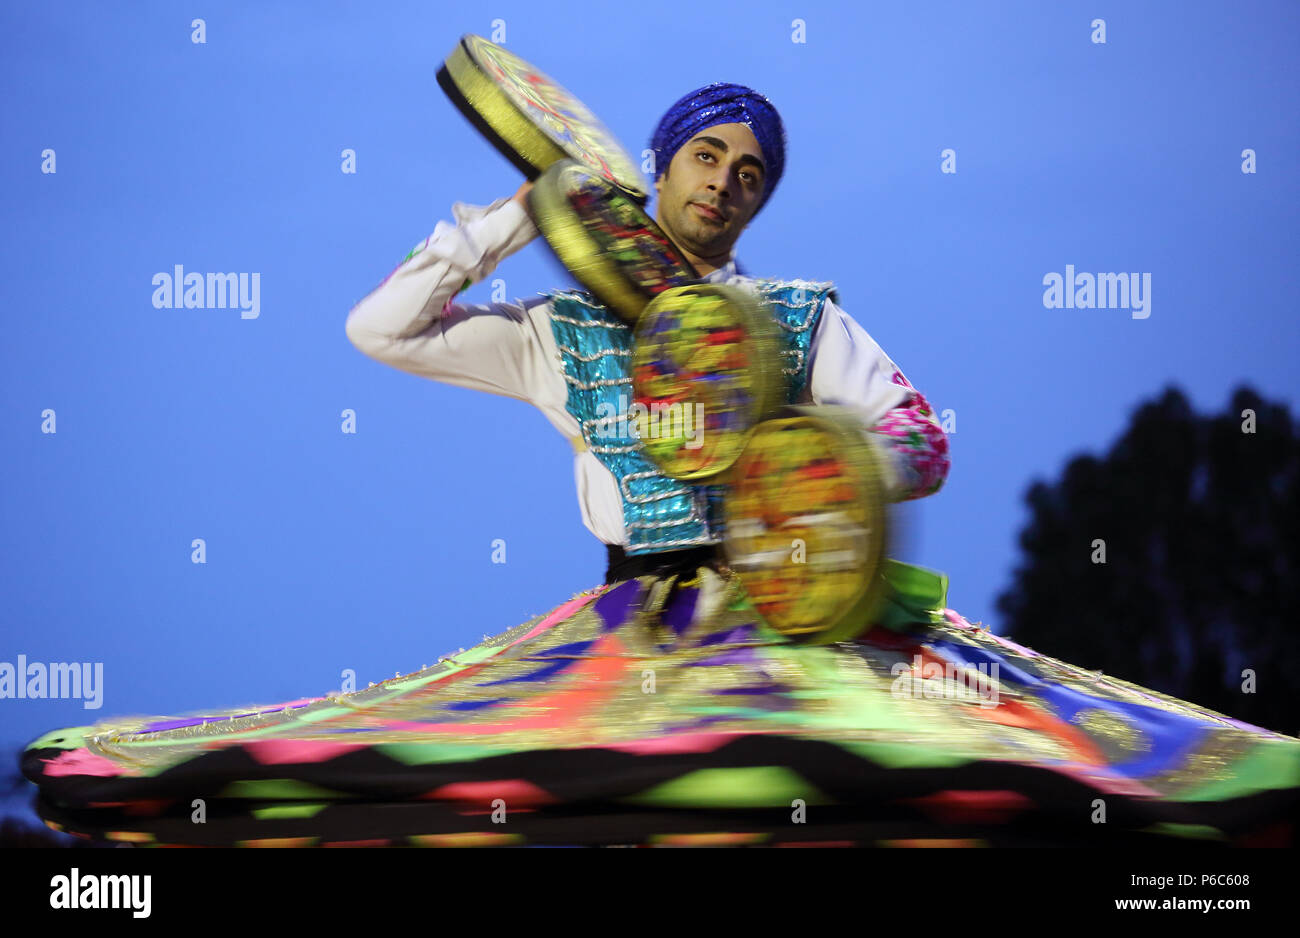 24.03.2017, Dubai, Emiratos Árabes Unidos, bailarín de folklore oriental muestra una danza giratoria Foto de stock